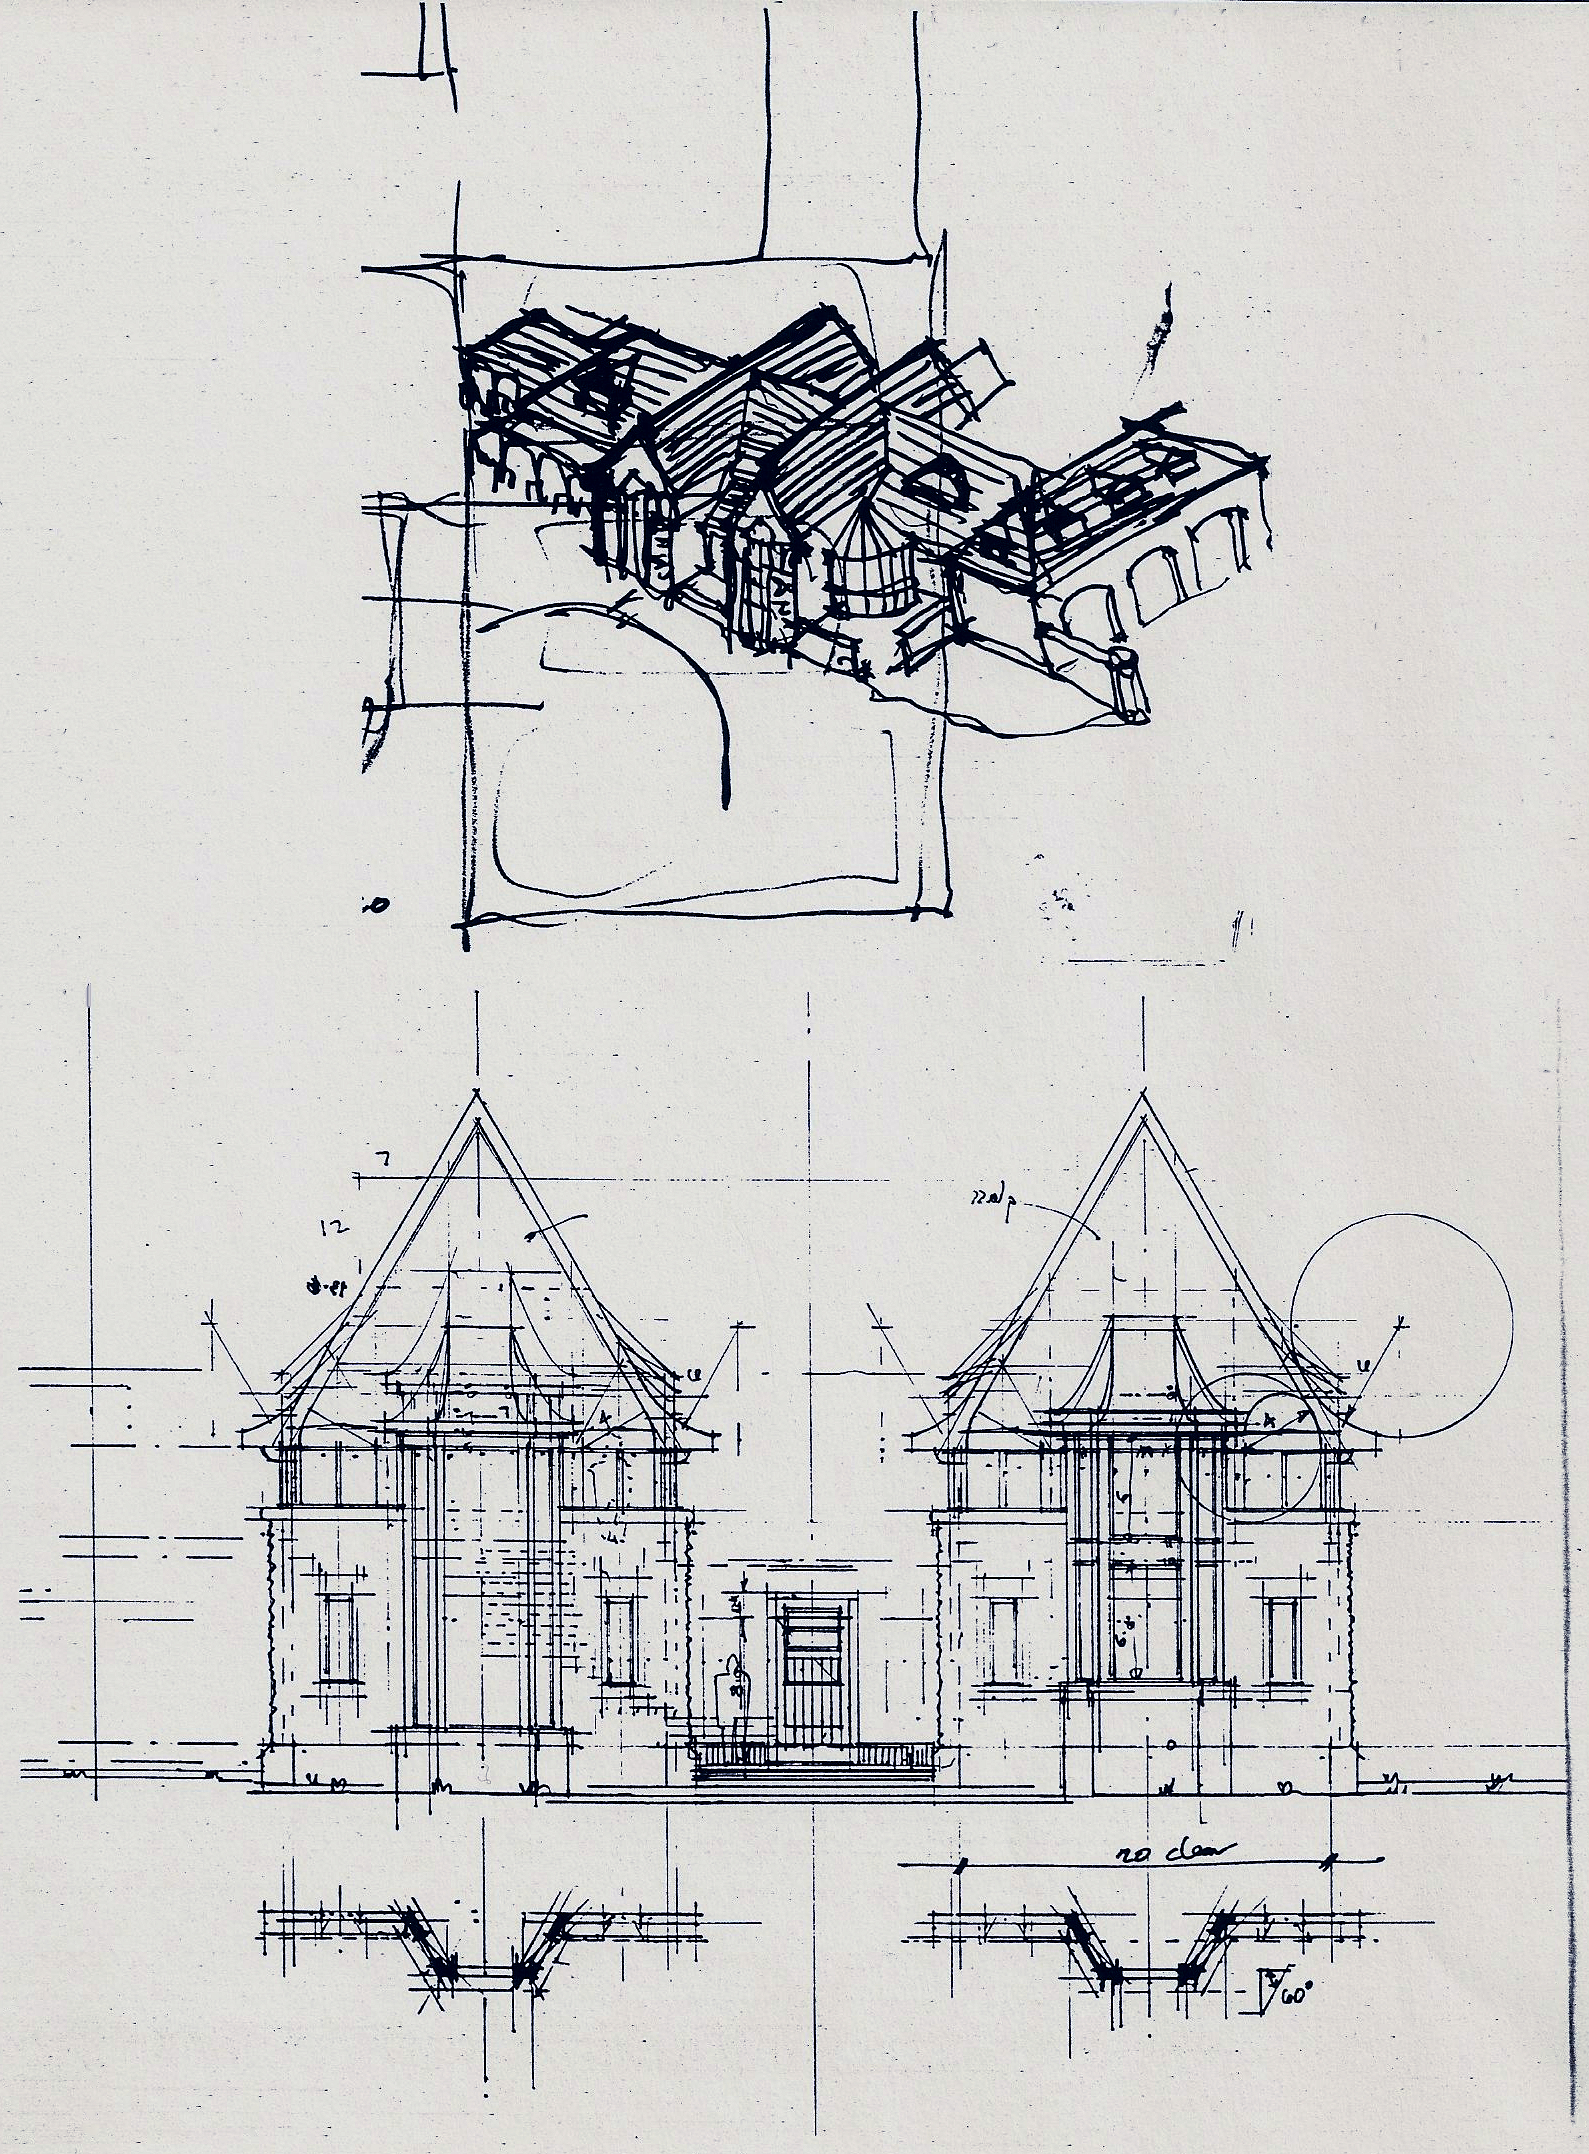 Early conceptual sketches